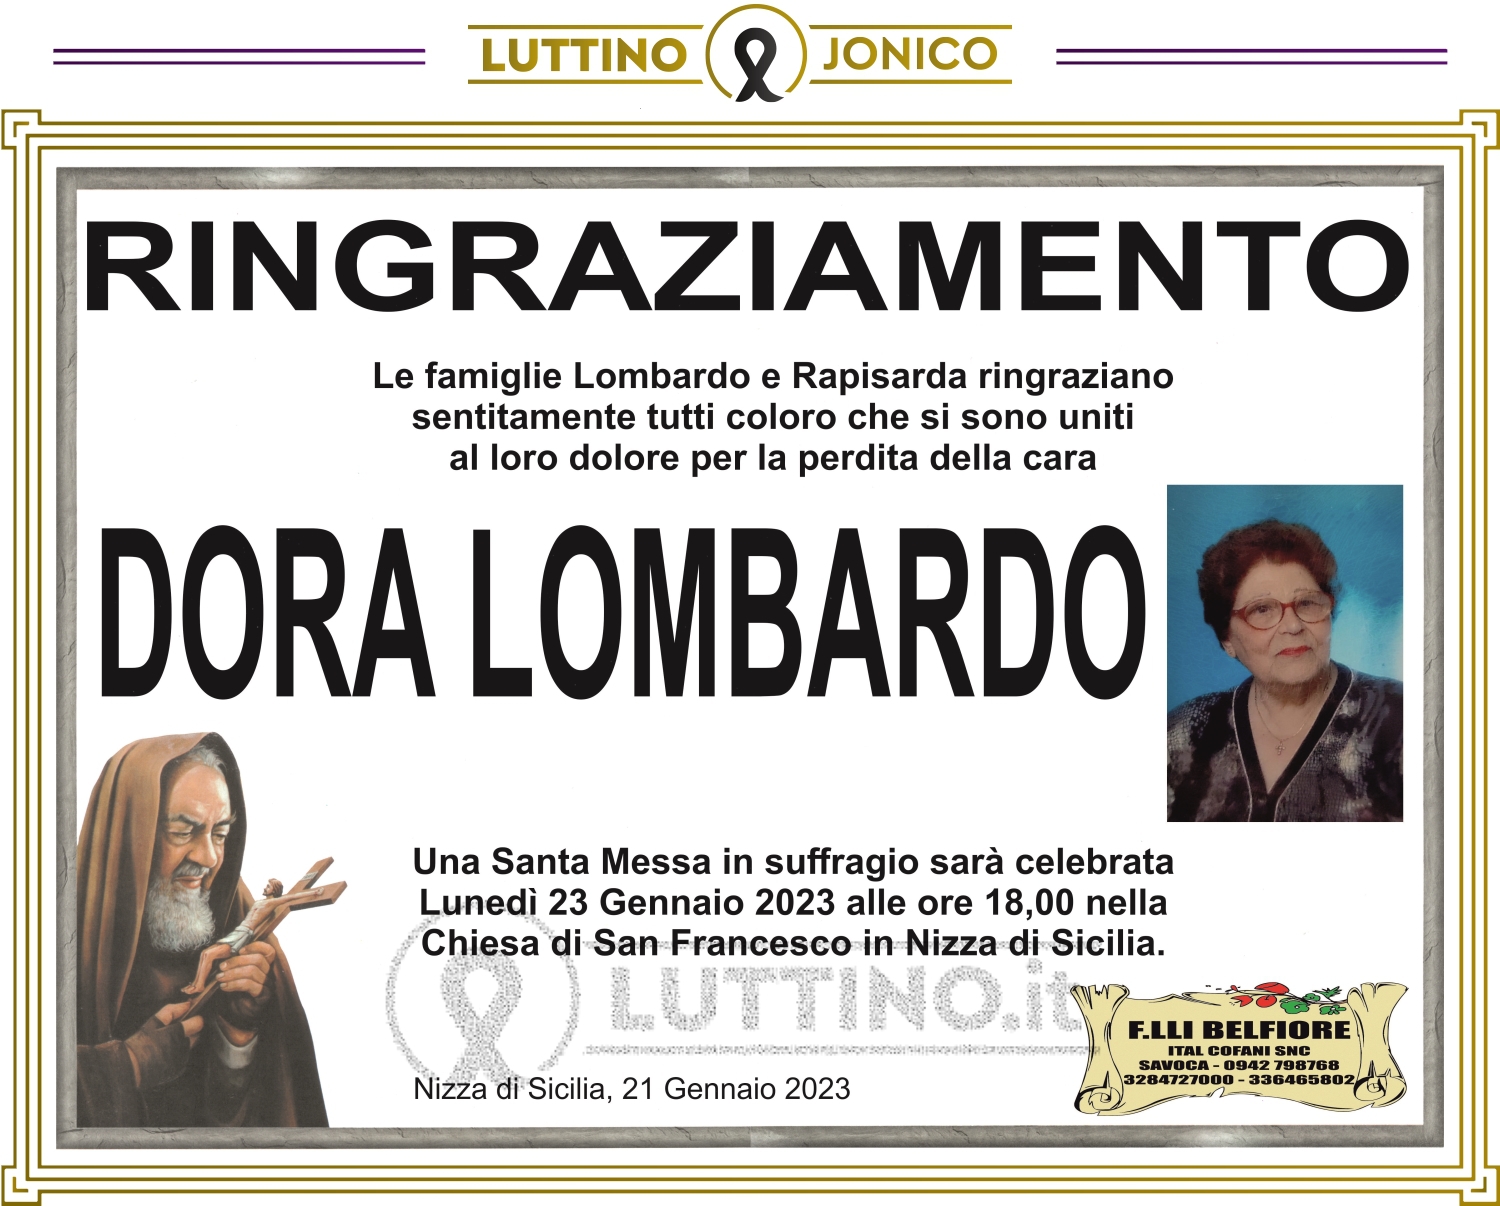 Dora Lombardo